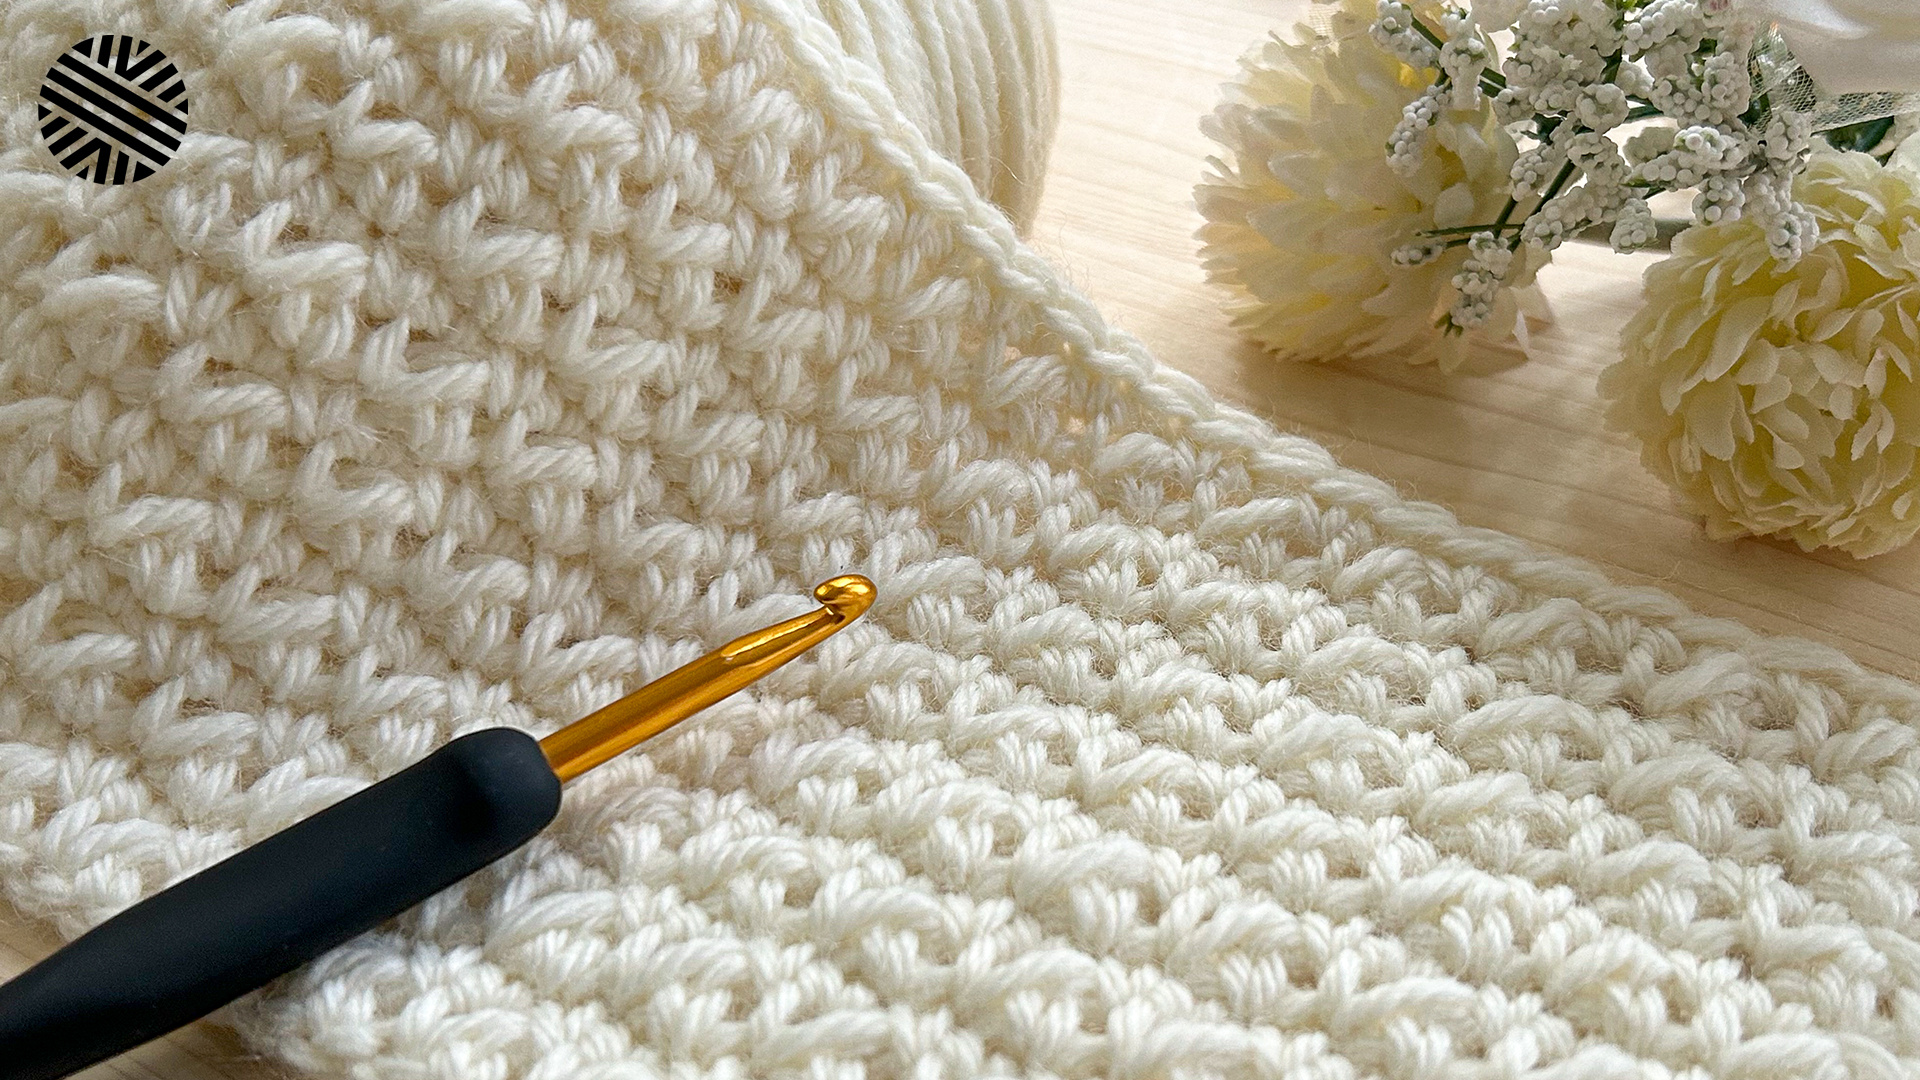 SUPER SIMPLE Crochet Blanket Pattern for Beginners. CHARMING